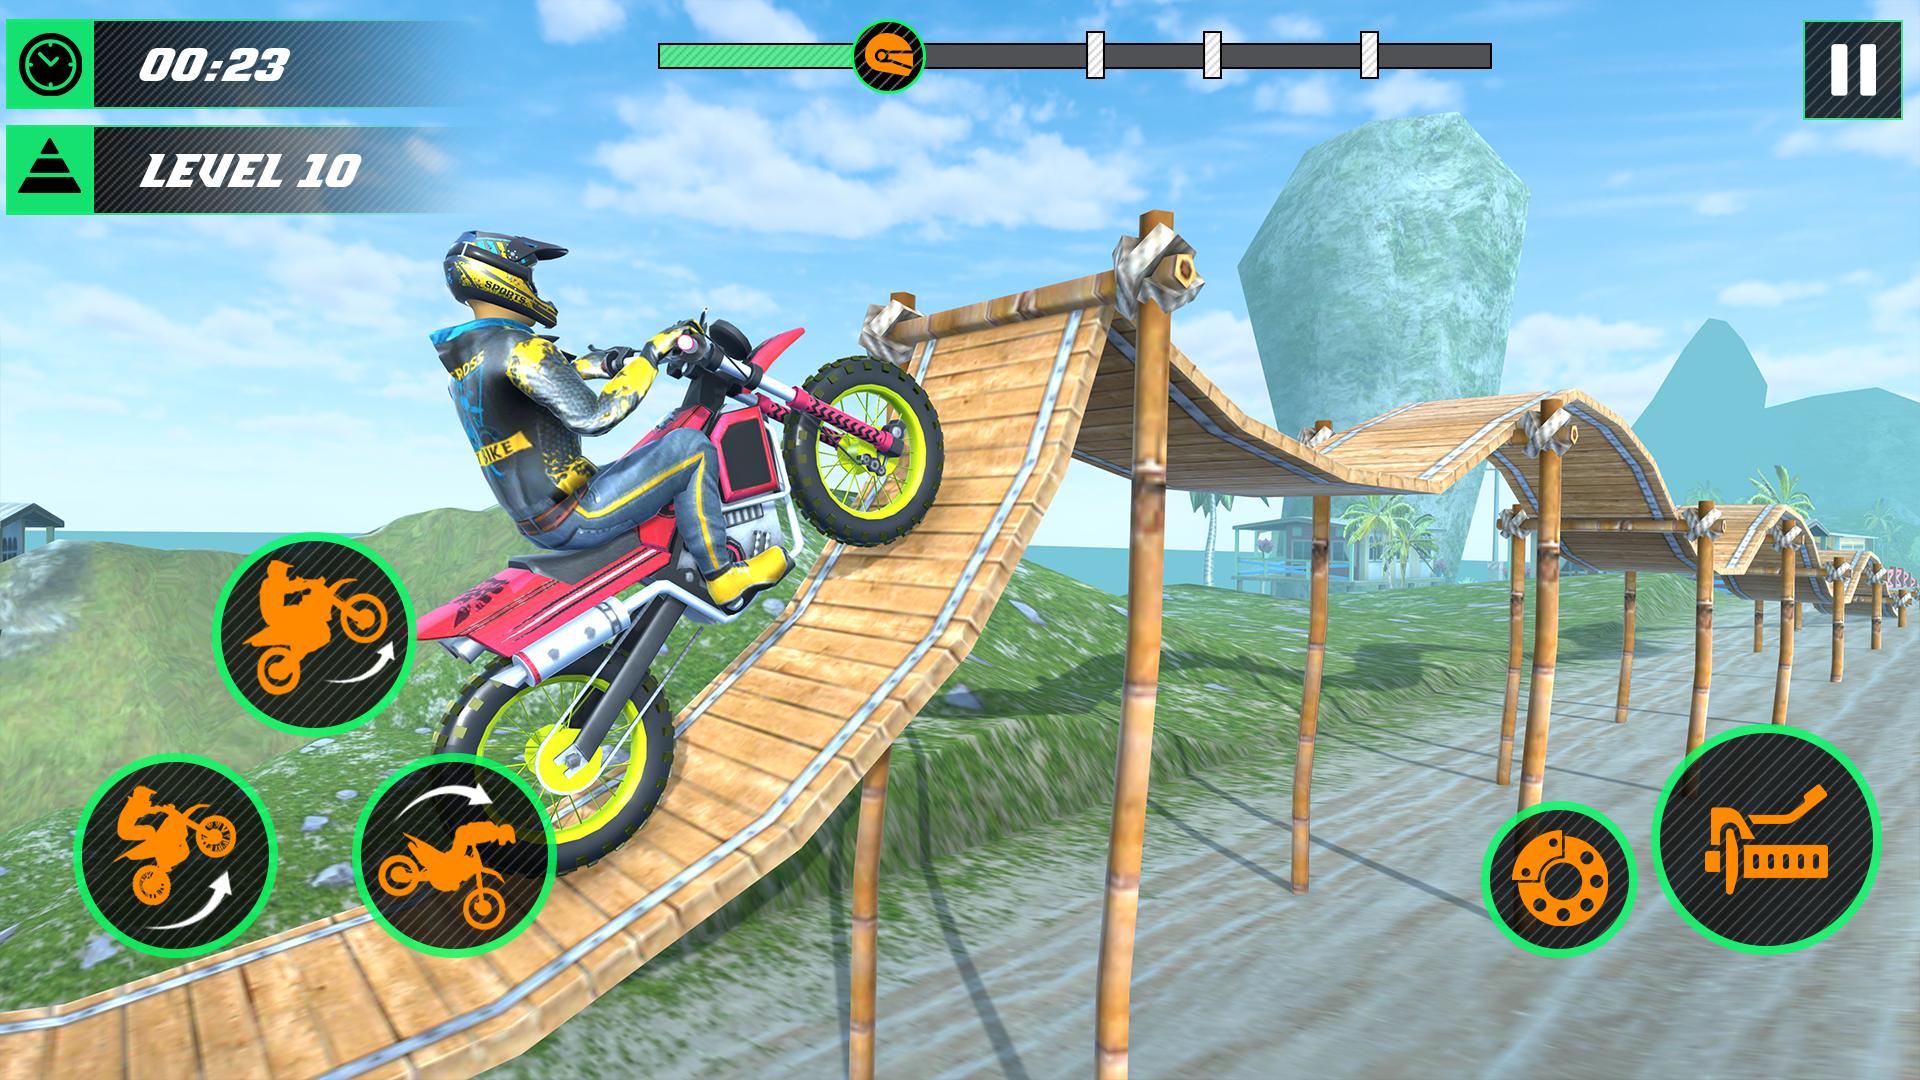 Jogos de Moto - Corrida Selvagem de Motos (Bike Game : Bike Stunt Games)